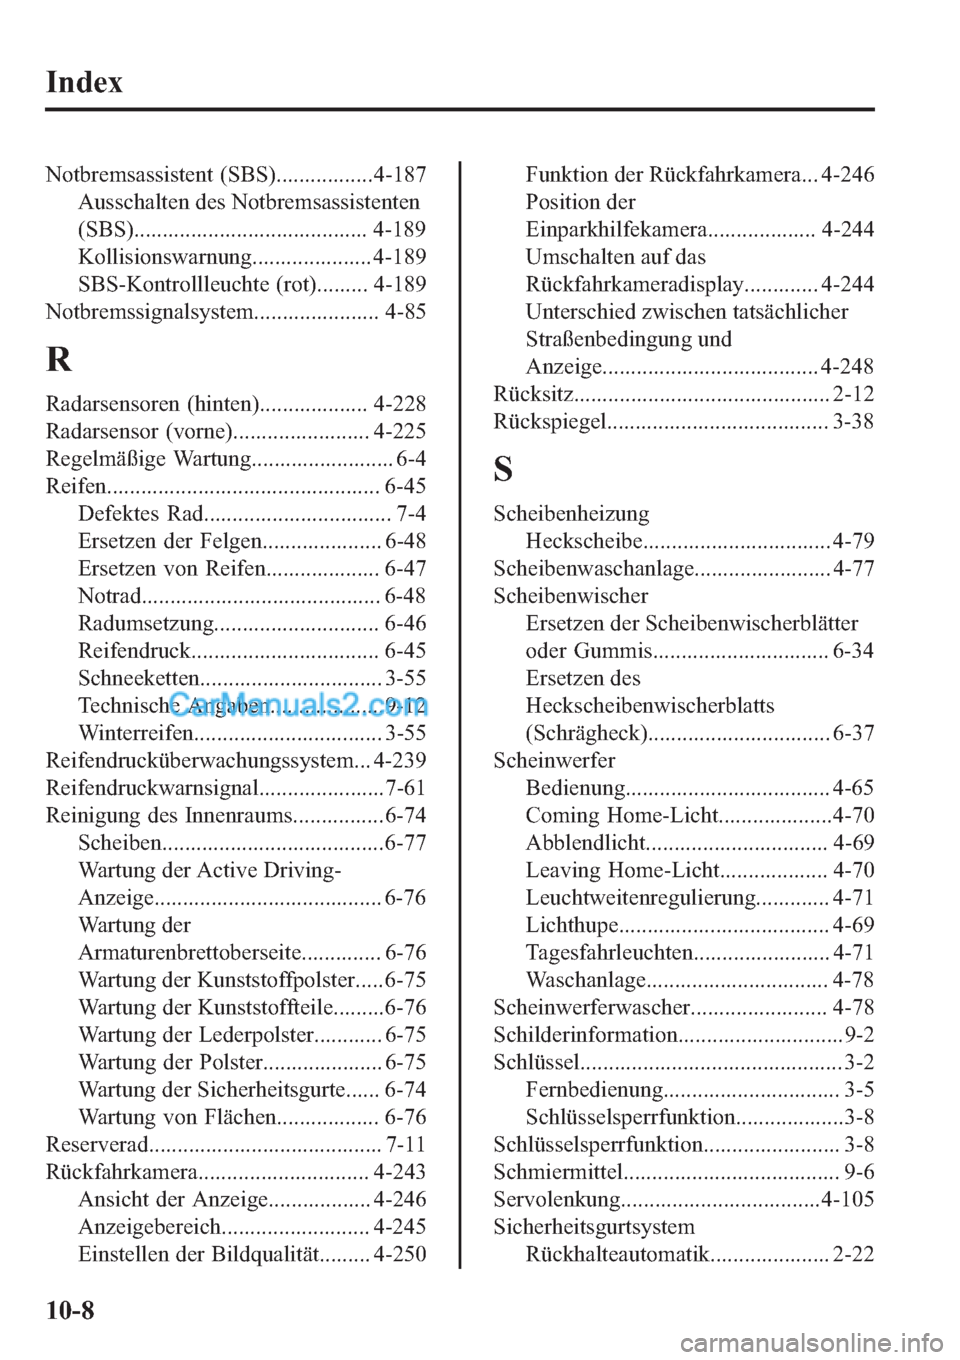 MAZDA MODEL 2 2019  Betriebsanleitung (in German) �,�Q�G�H�[
�1�R�W�E�U�H�P�V�D�V�V�L�V�W�H�Q�W���6�%�6�����������������������
�$�X�V�V�F�K�D�O�W�H�Q��G�H�V��1�R�W�E�U�H�P�V�D�V�V�L�V�W�H�Q�W�H�Q
��6�%�6����������